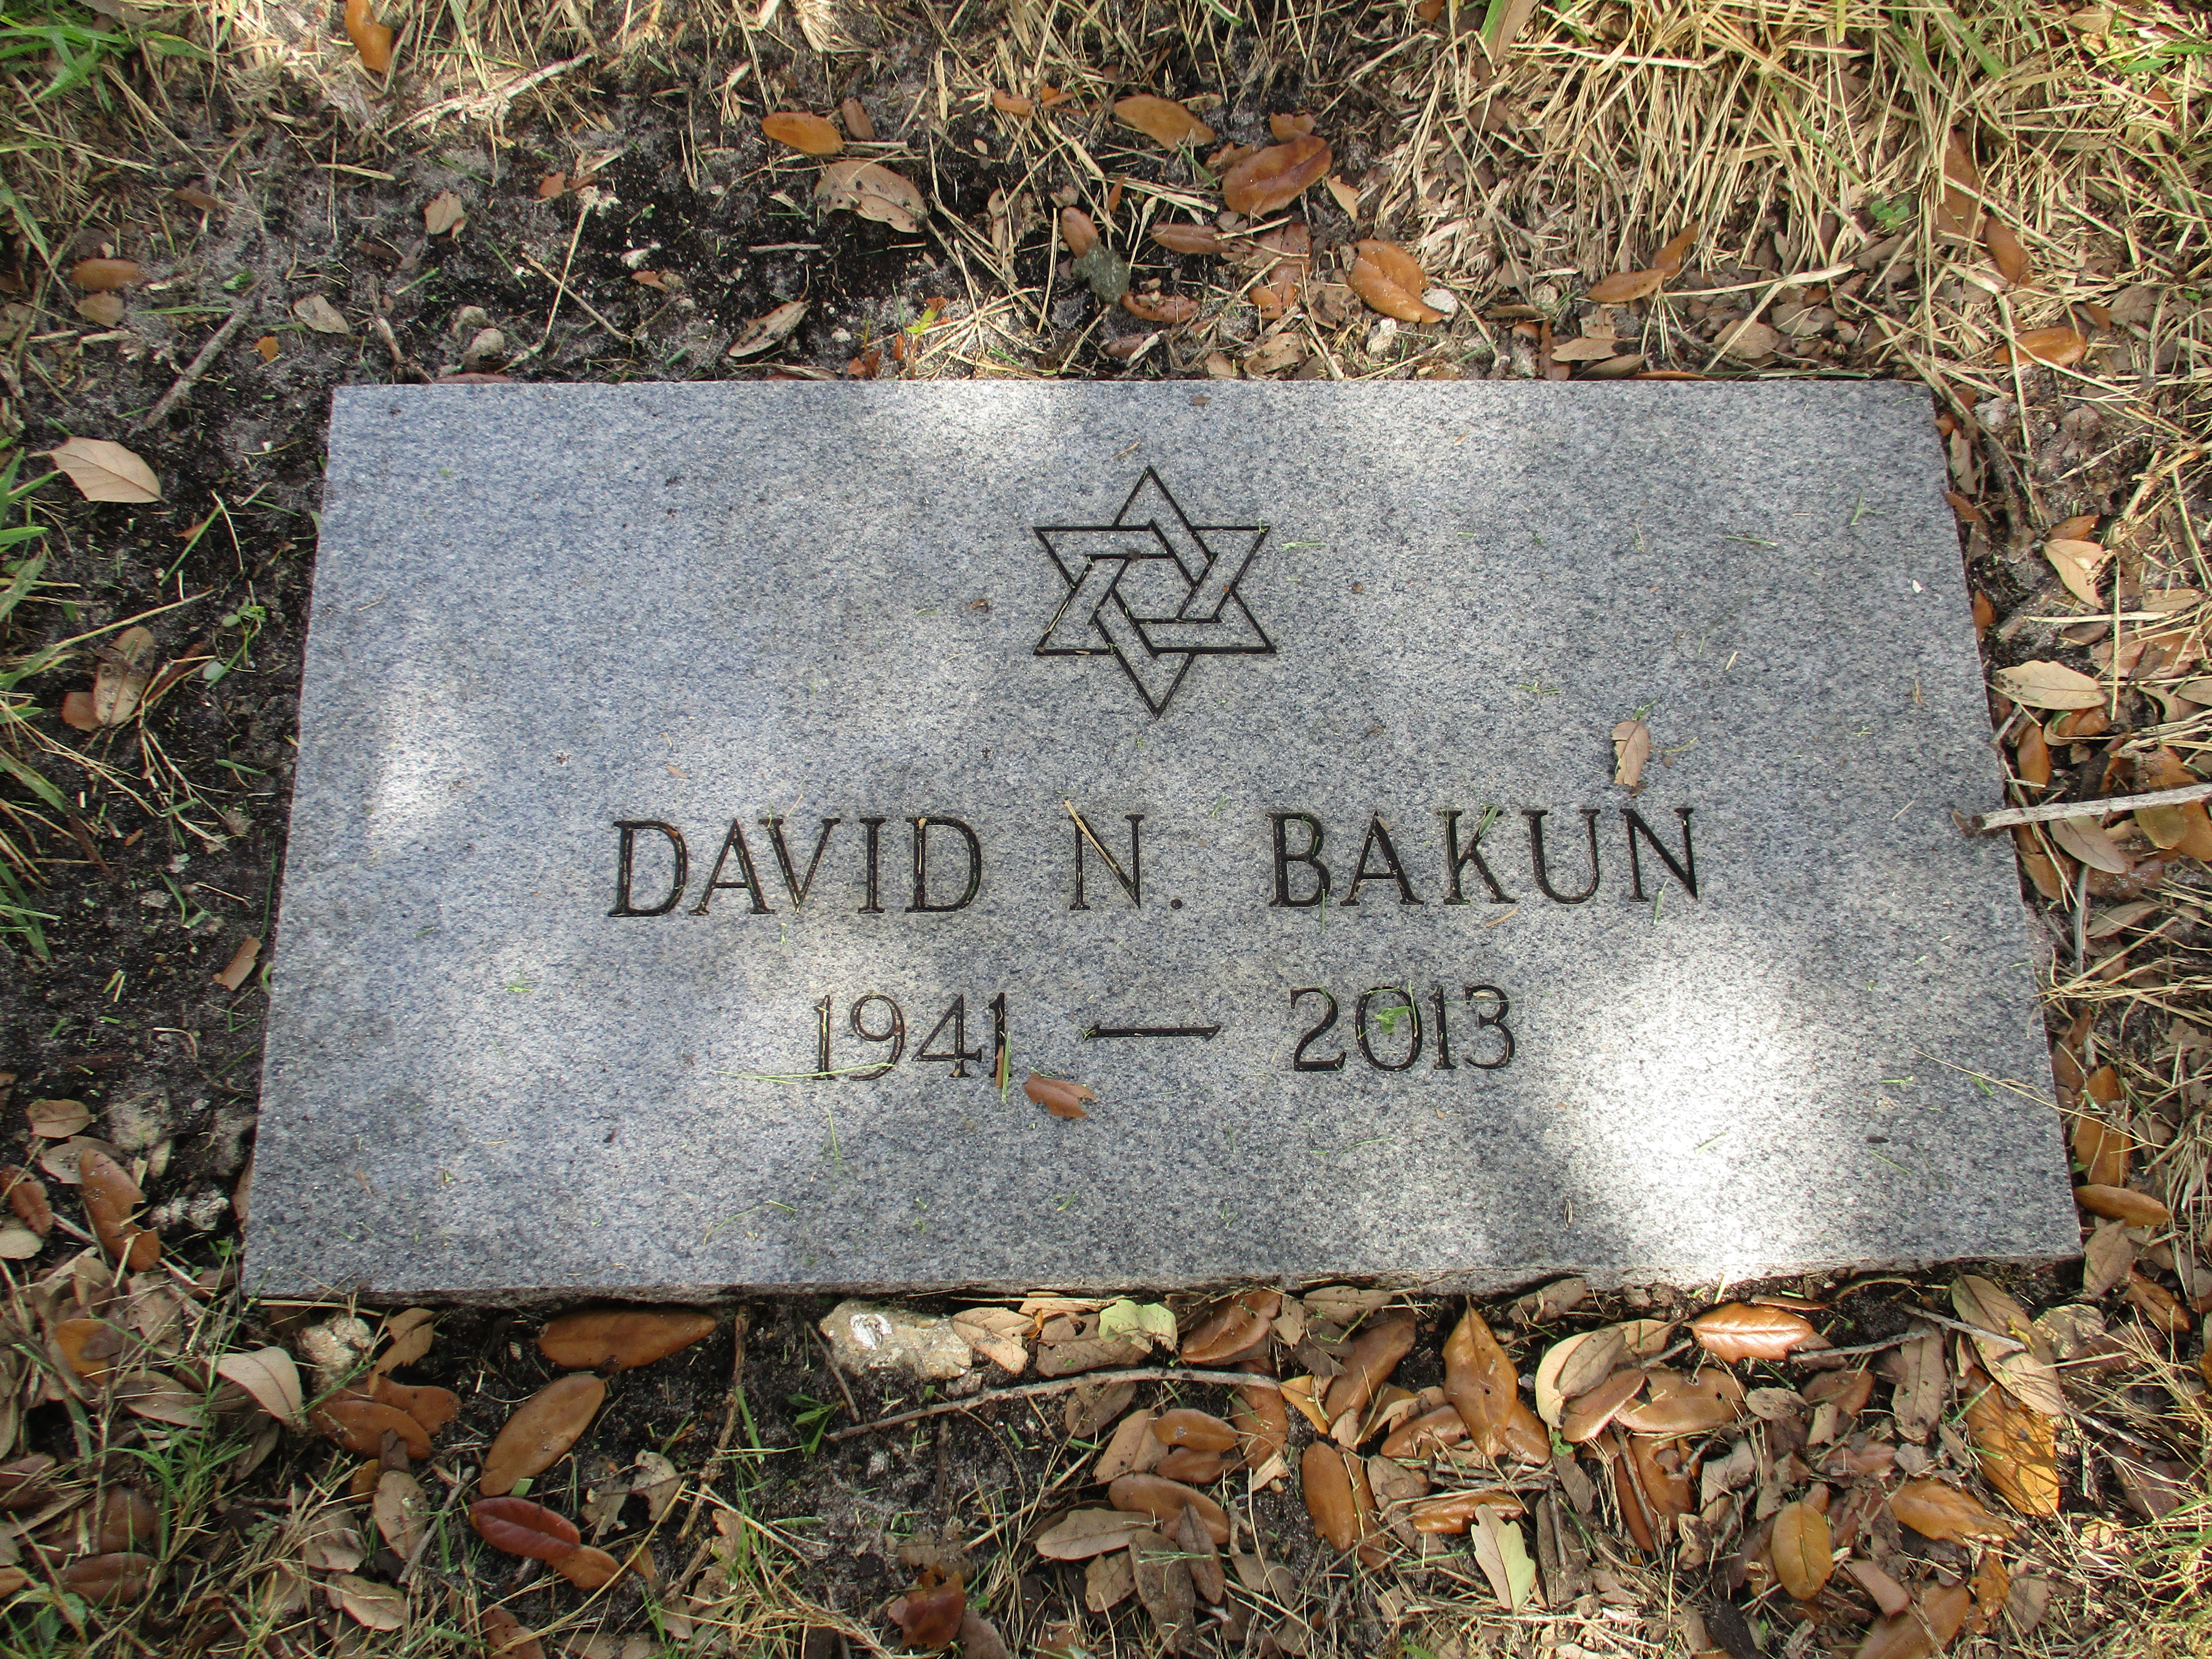 David N Bakun